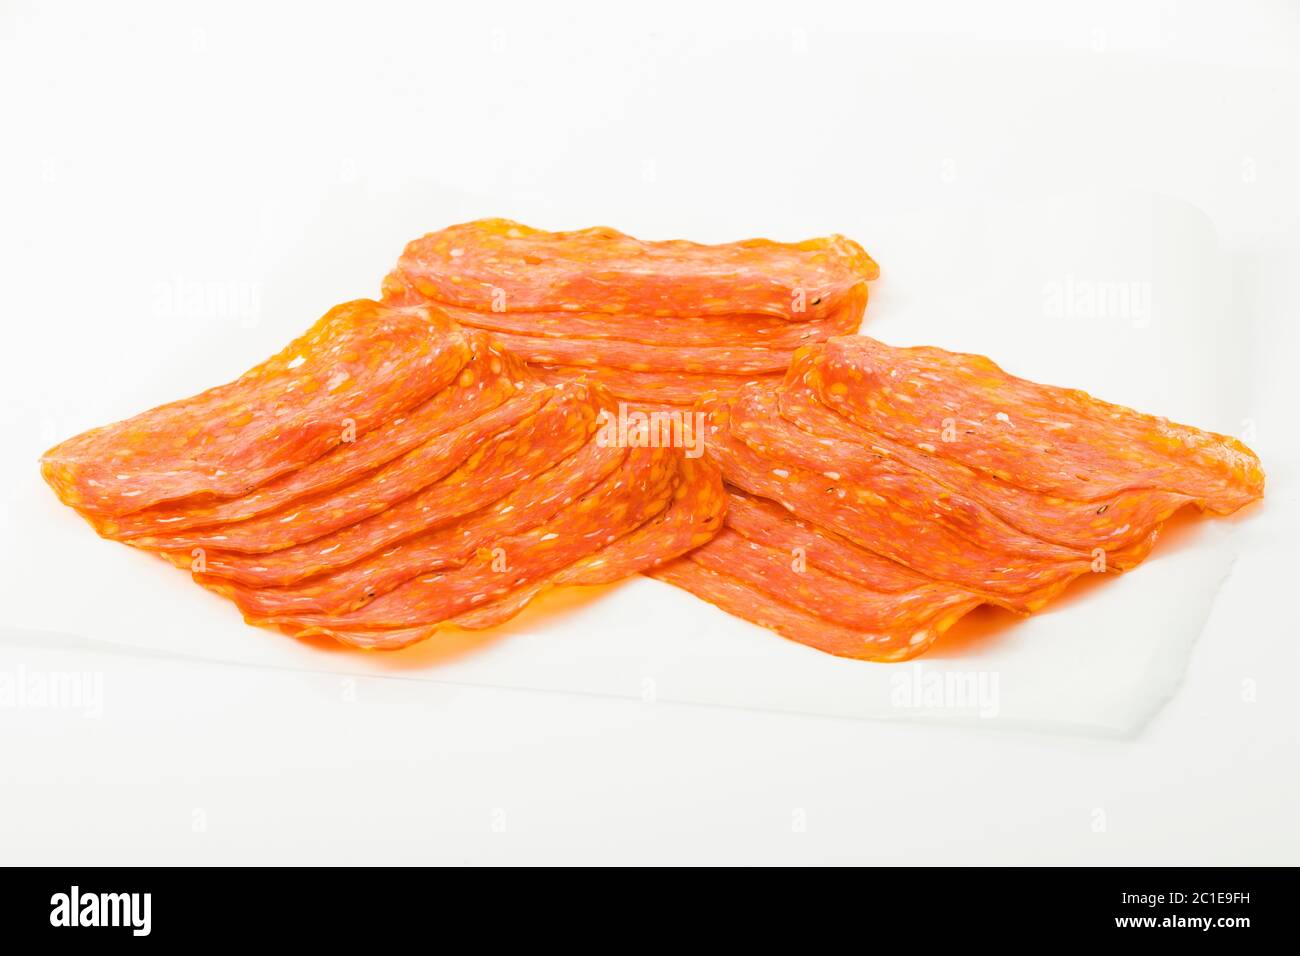 Salami spianata calabra, feurig gewürzt Stockfoto